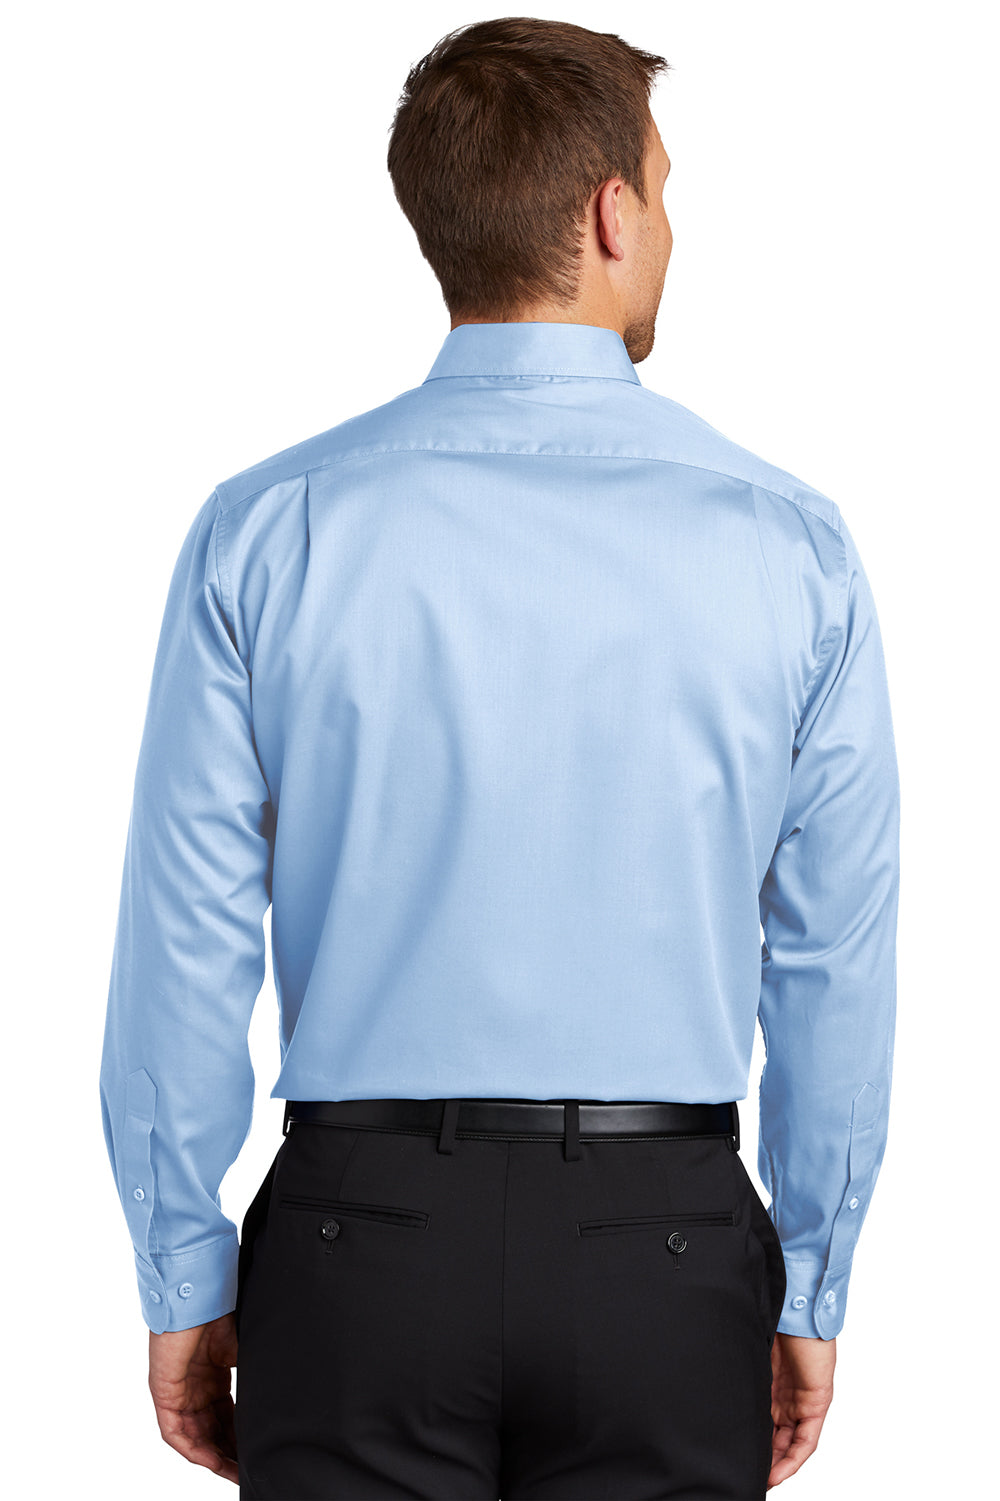 Port Authority S663/TS663 Mens SuperPro Wrinkle Resistant Long Sleeve Button Down Shirt w/ Pocket Cloud Blue Back